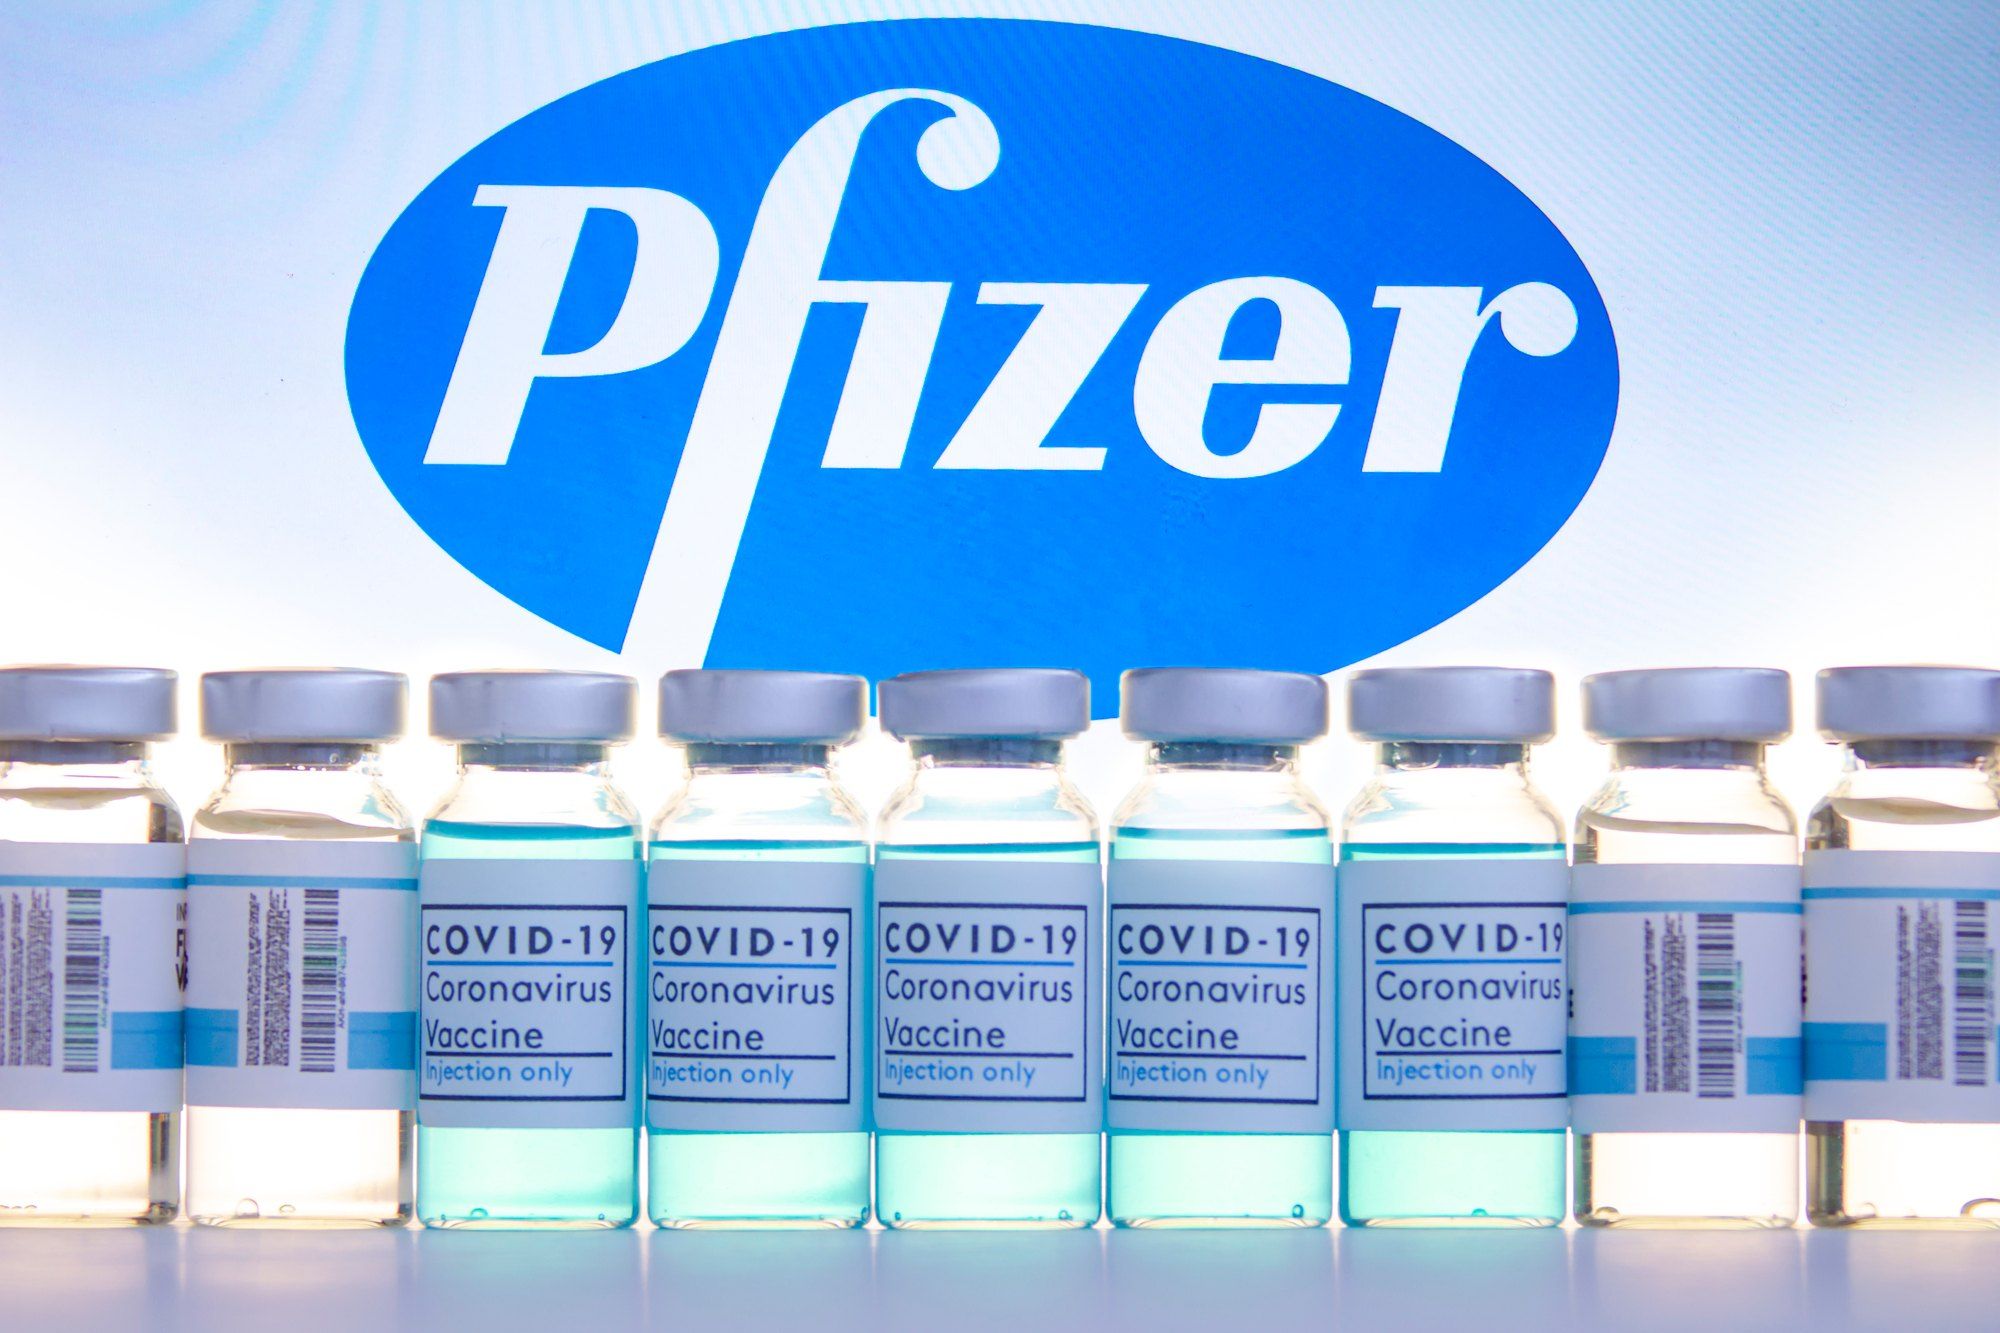 Pfizer vaccines regarding Canada getting the COVID-19 vaccine approval 